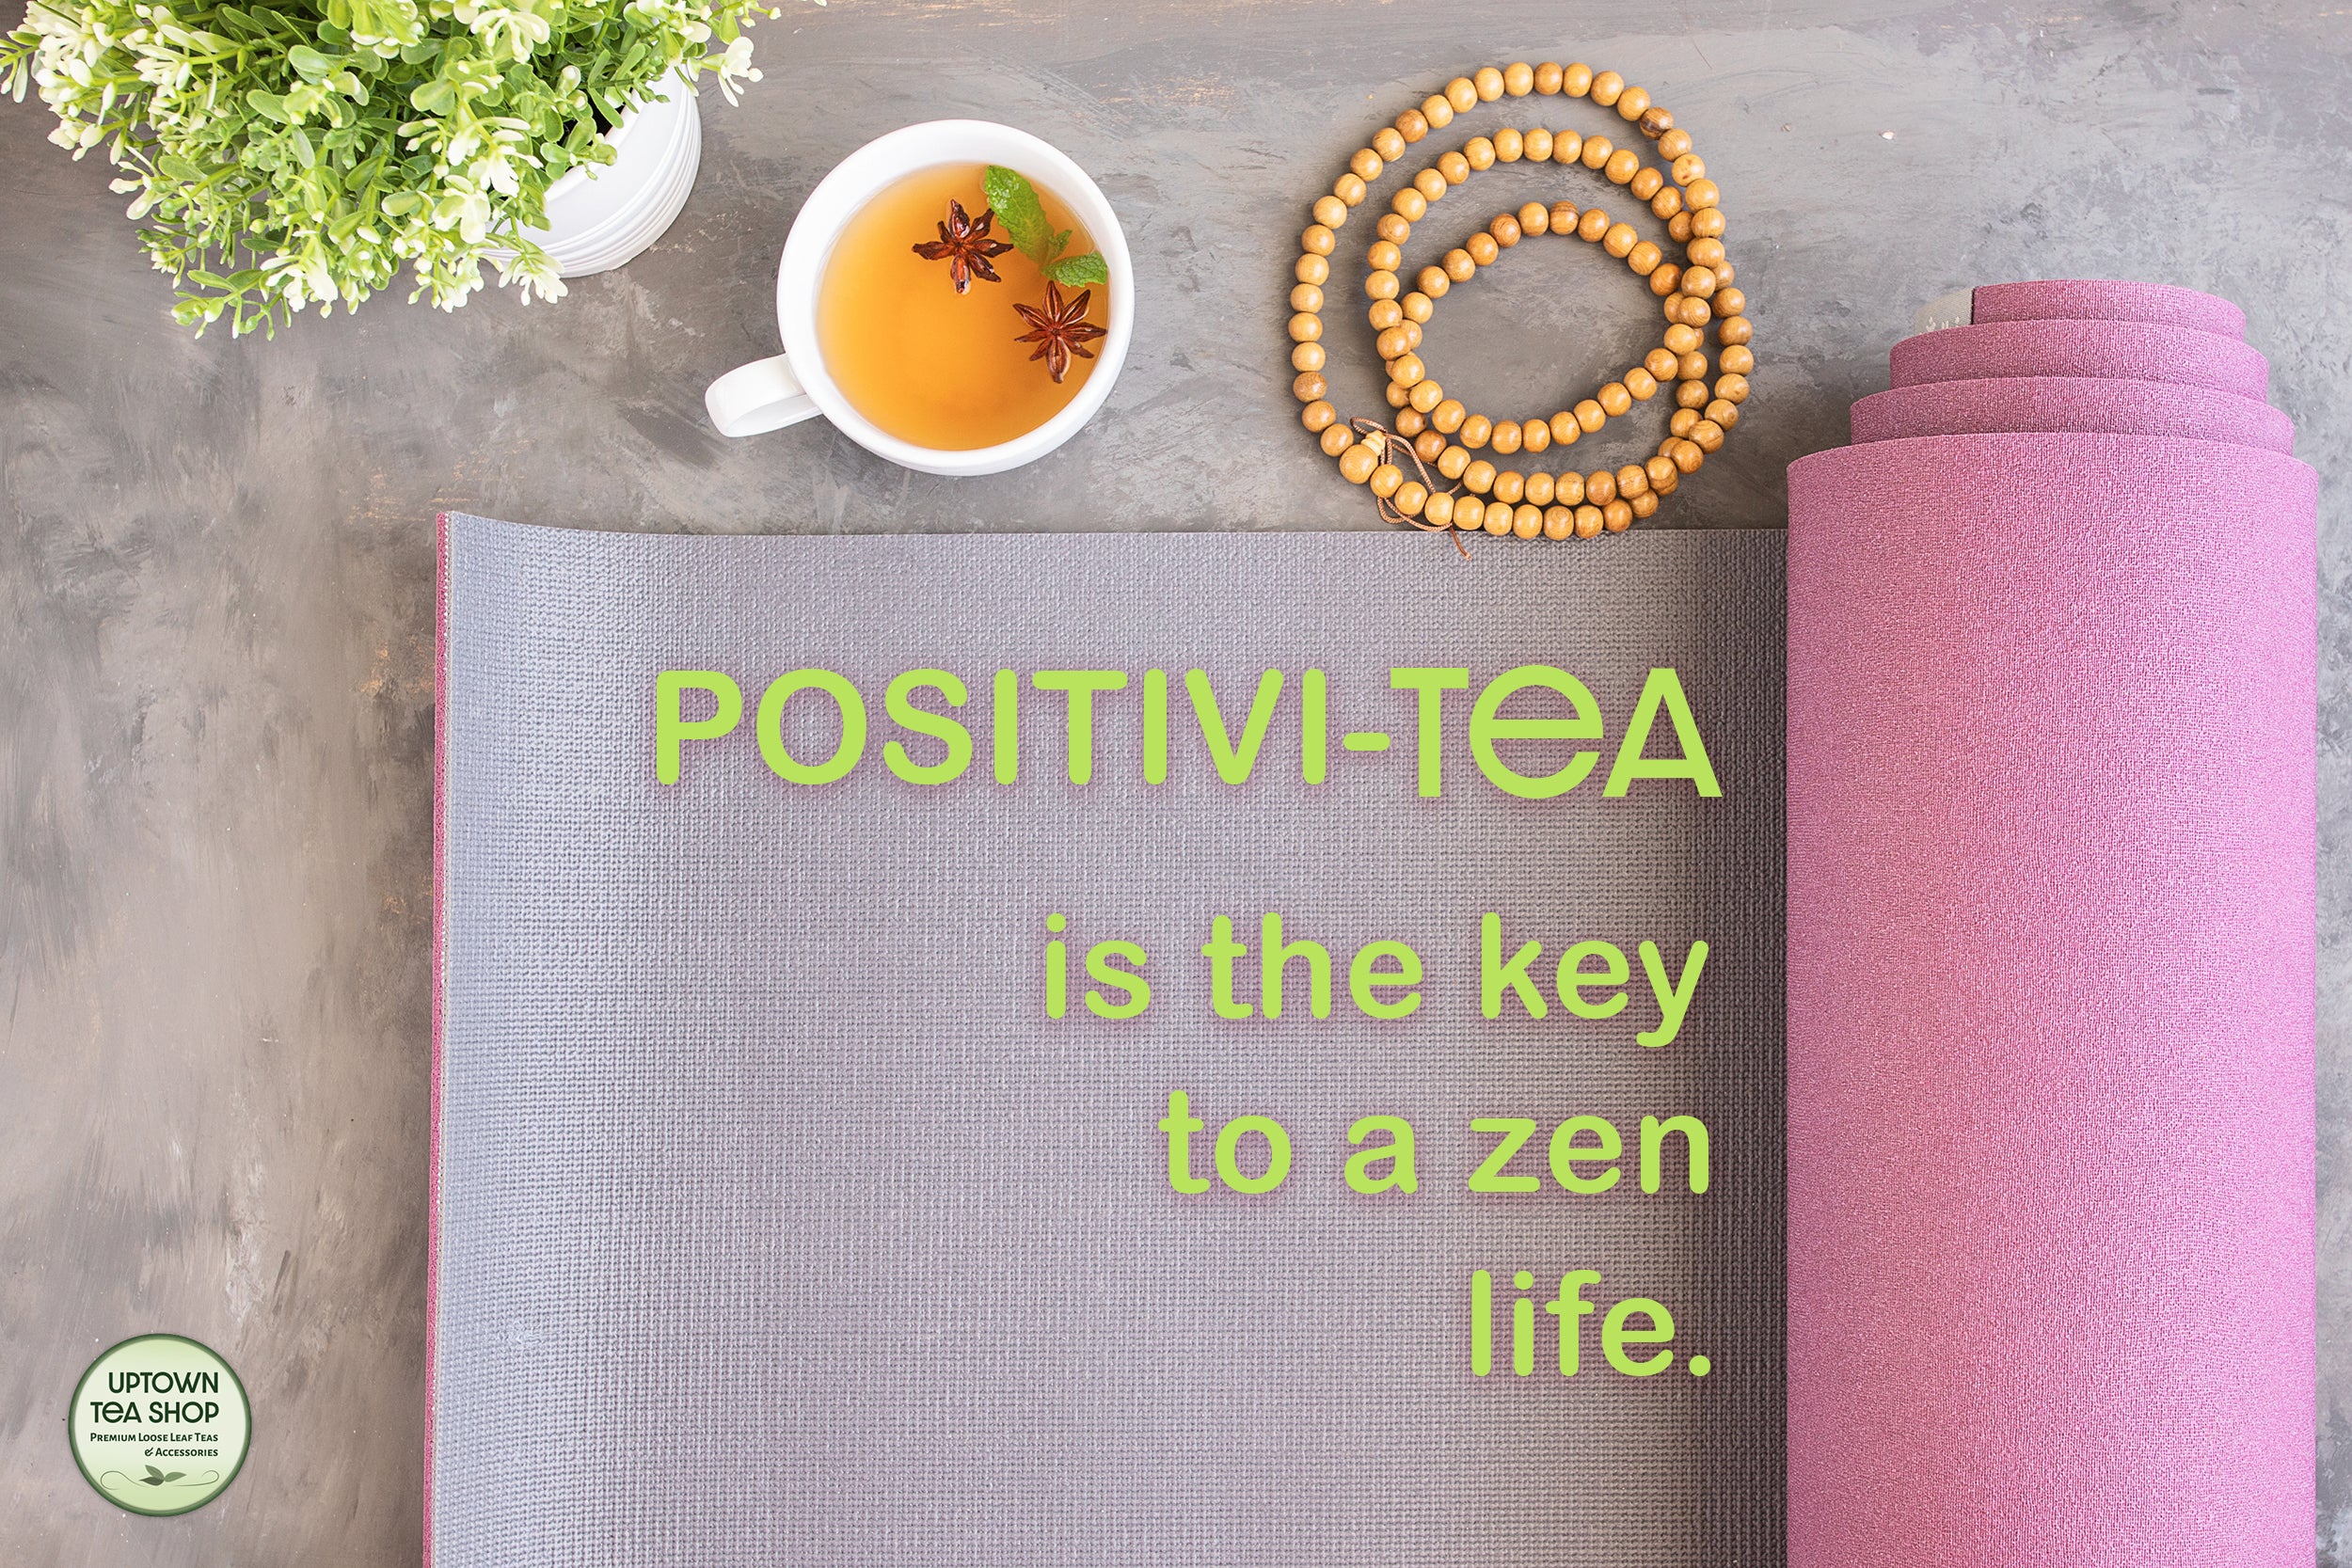 Positivi-Tea is the key to a zen life.